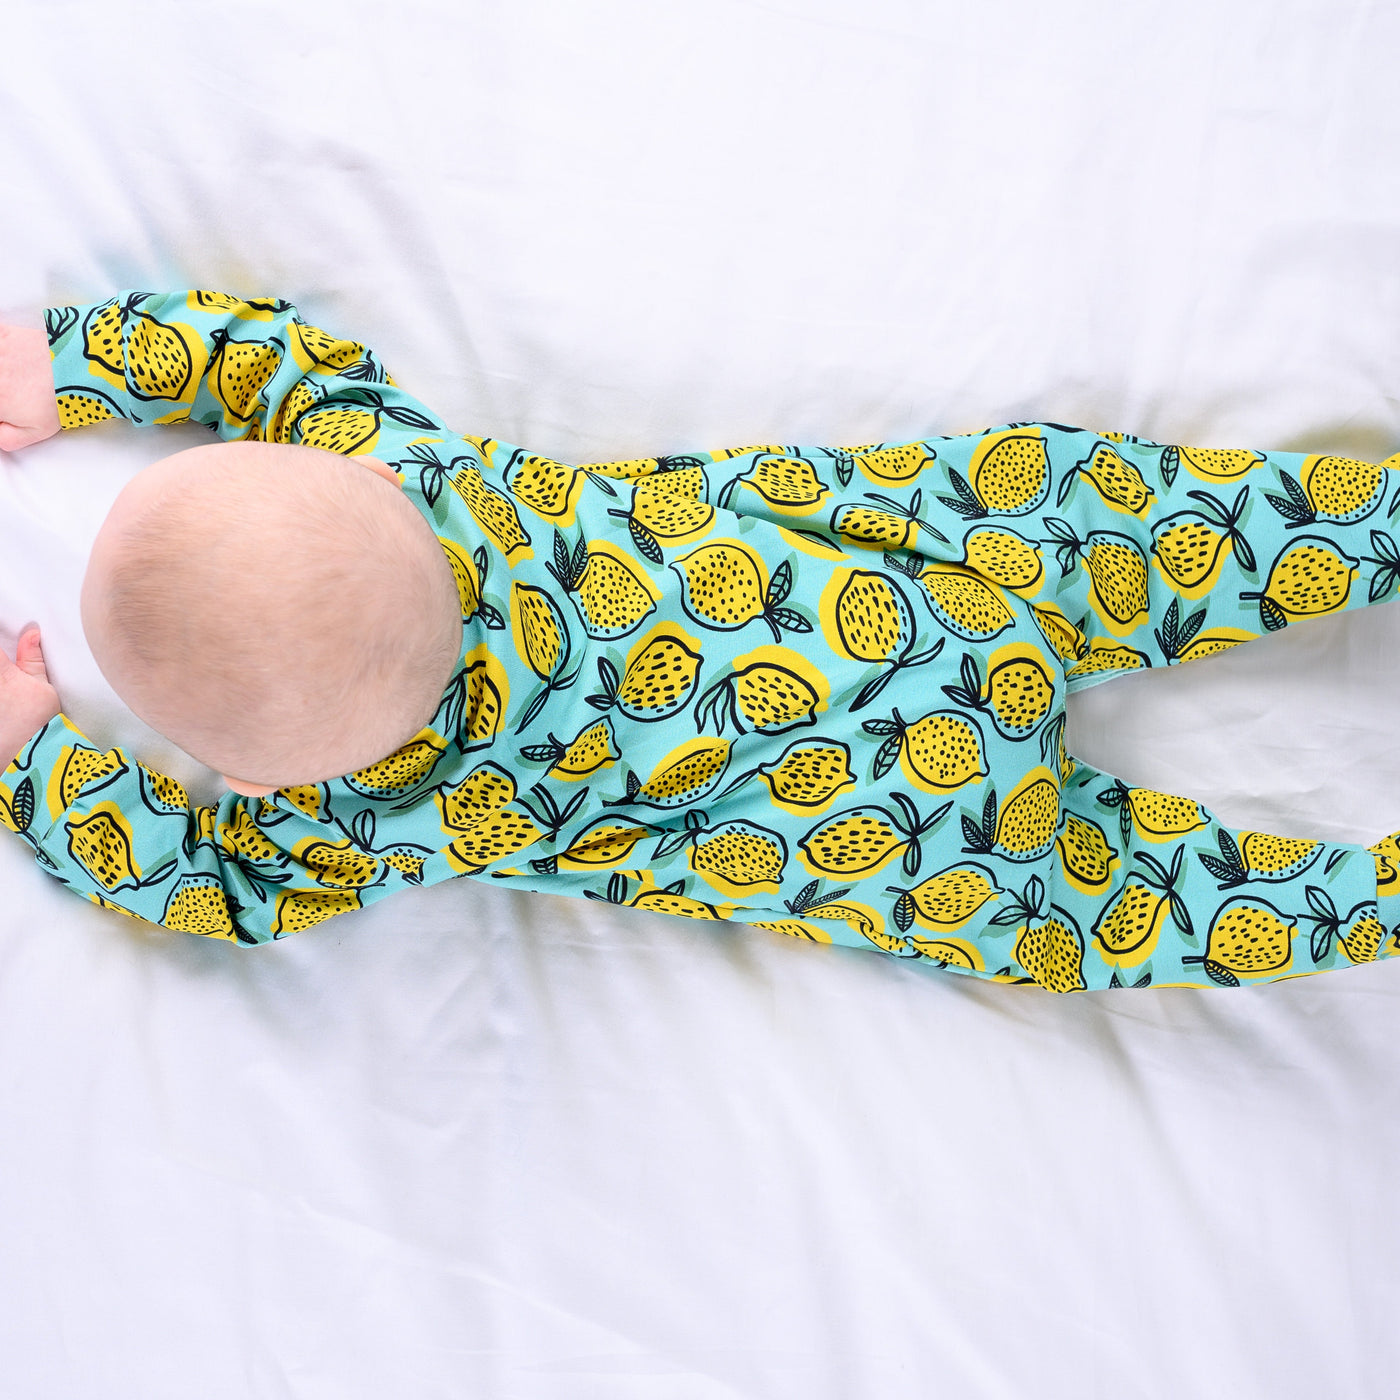 Lemon Print Cotton Sleepsuit-Sleepsuit-Fred & Noah-Yes Bebe